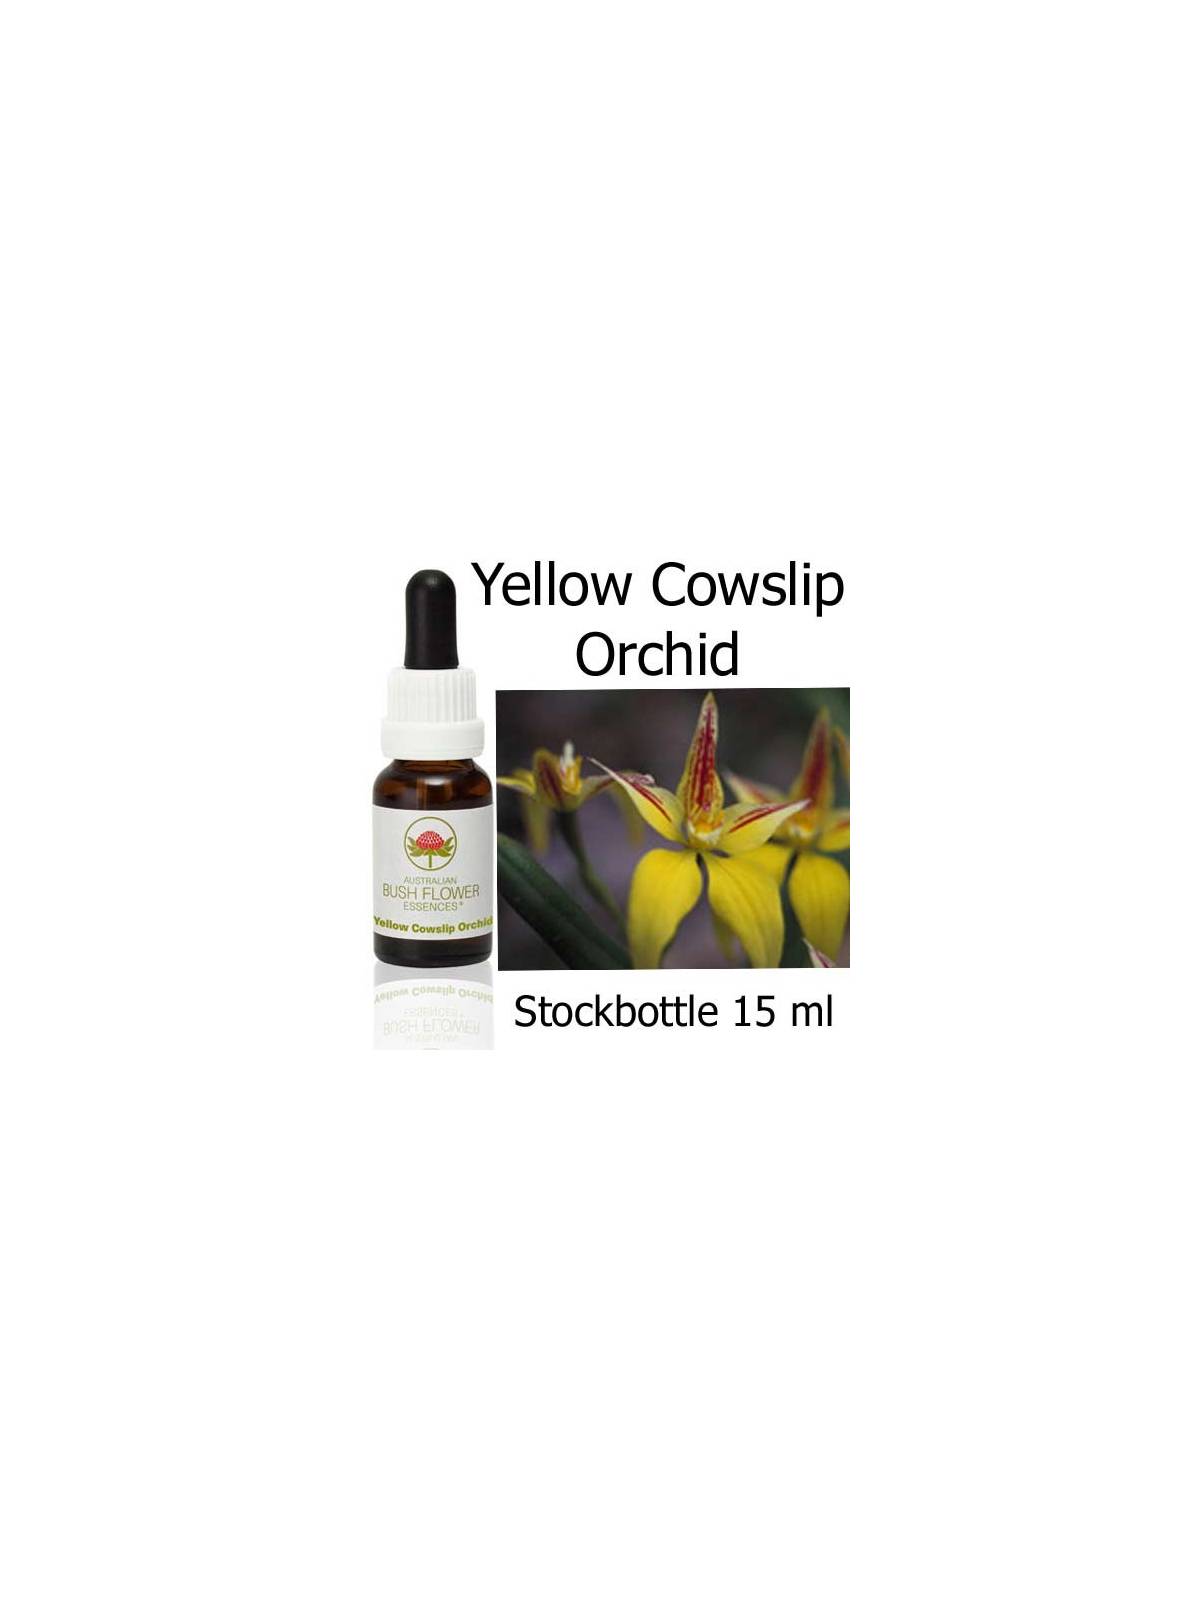 Fiori Australiani Yellow Cowslip Orchid Australian Bush Flower Essences stockbottles